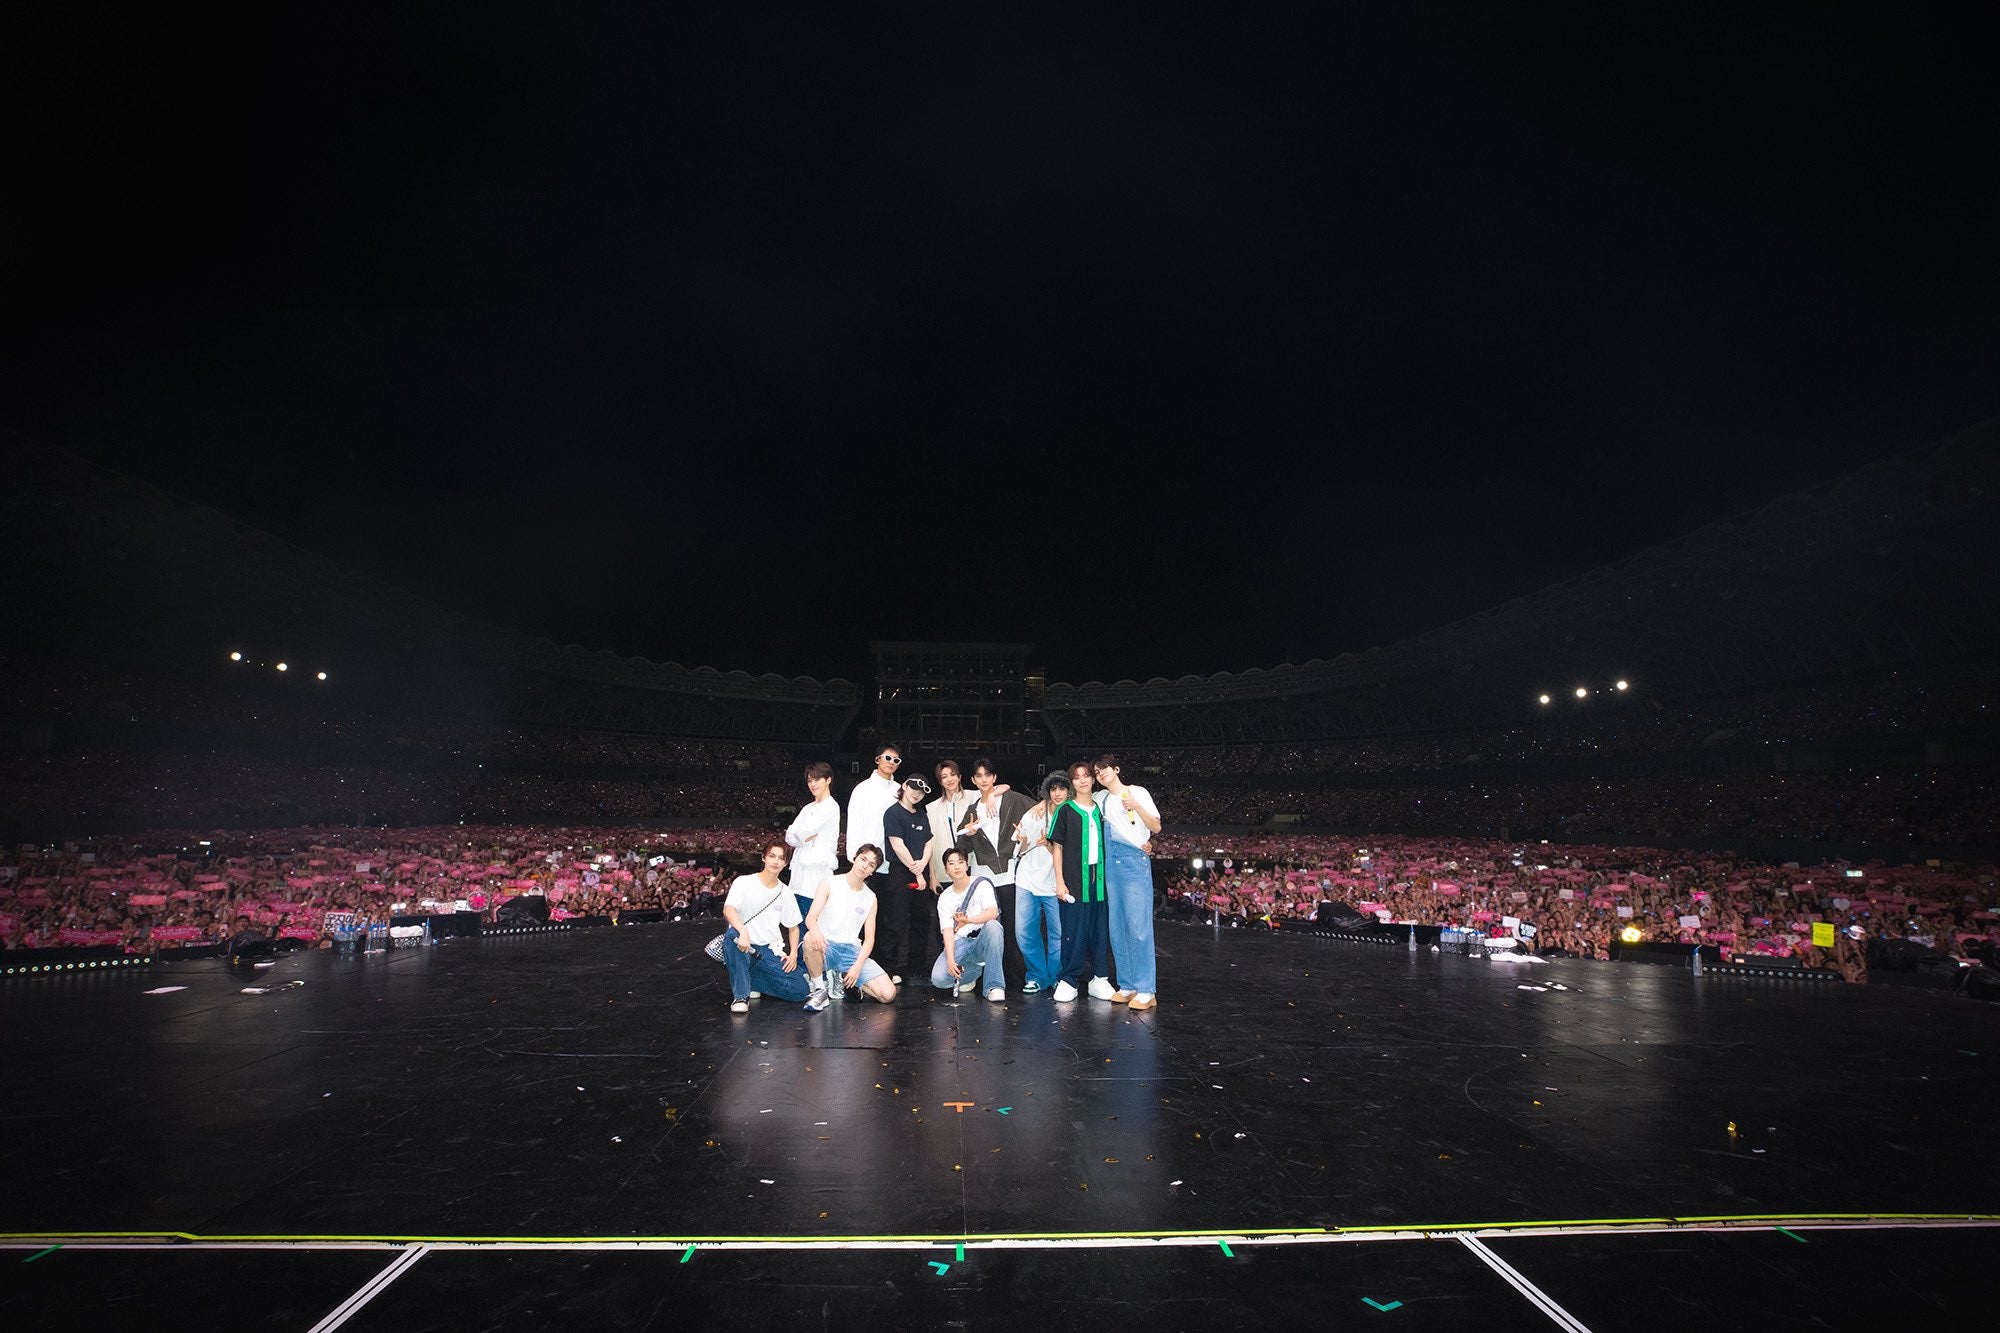 [Kpop Planet News] SEVENTEEN Successfully Conclude 'FOLLOW TO BULACAN' Concert